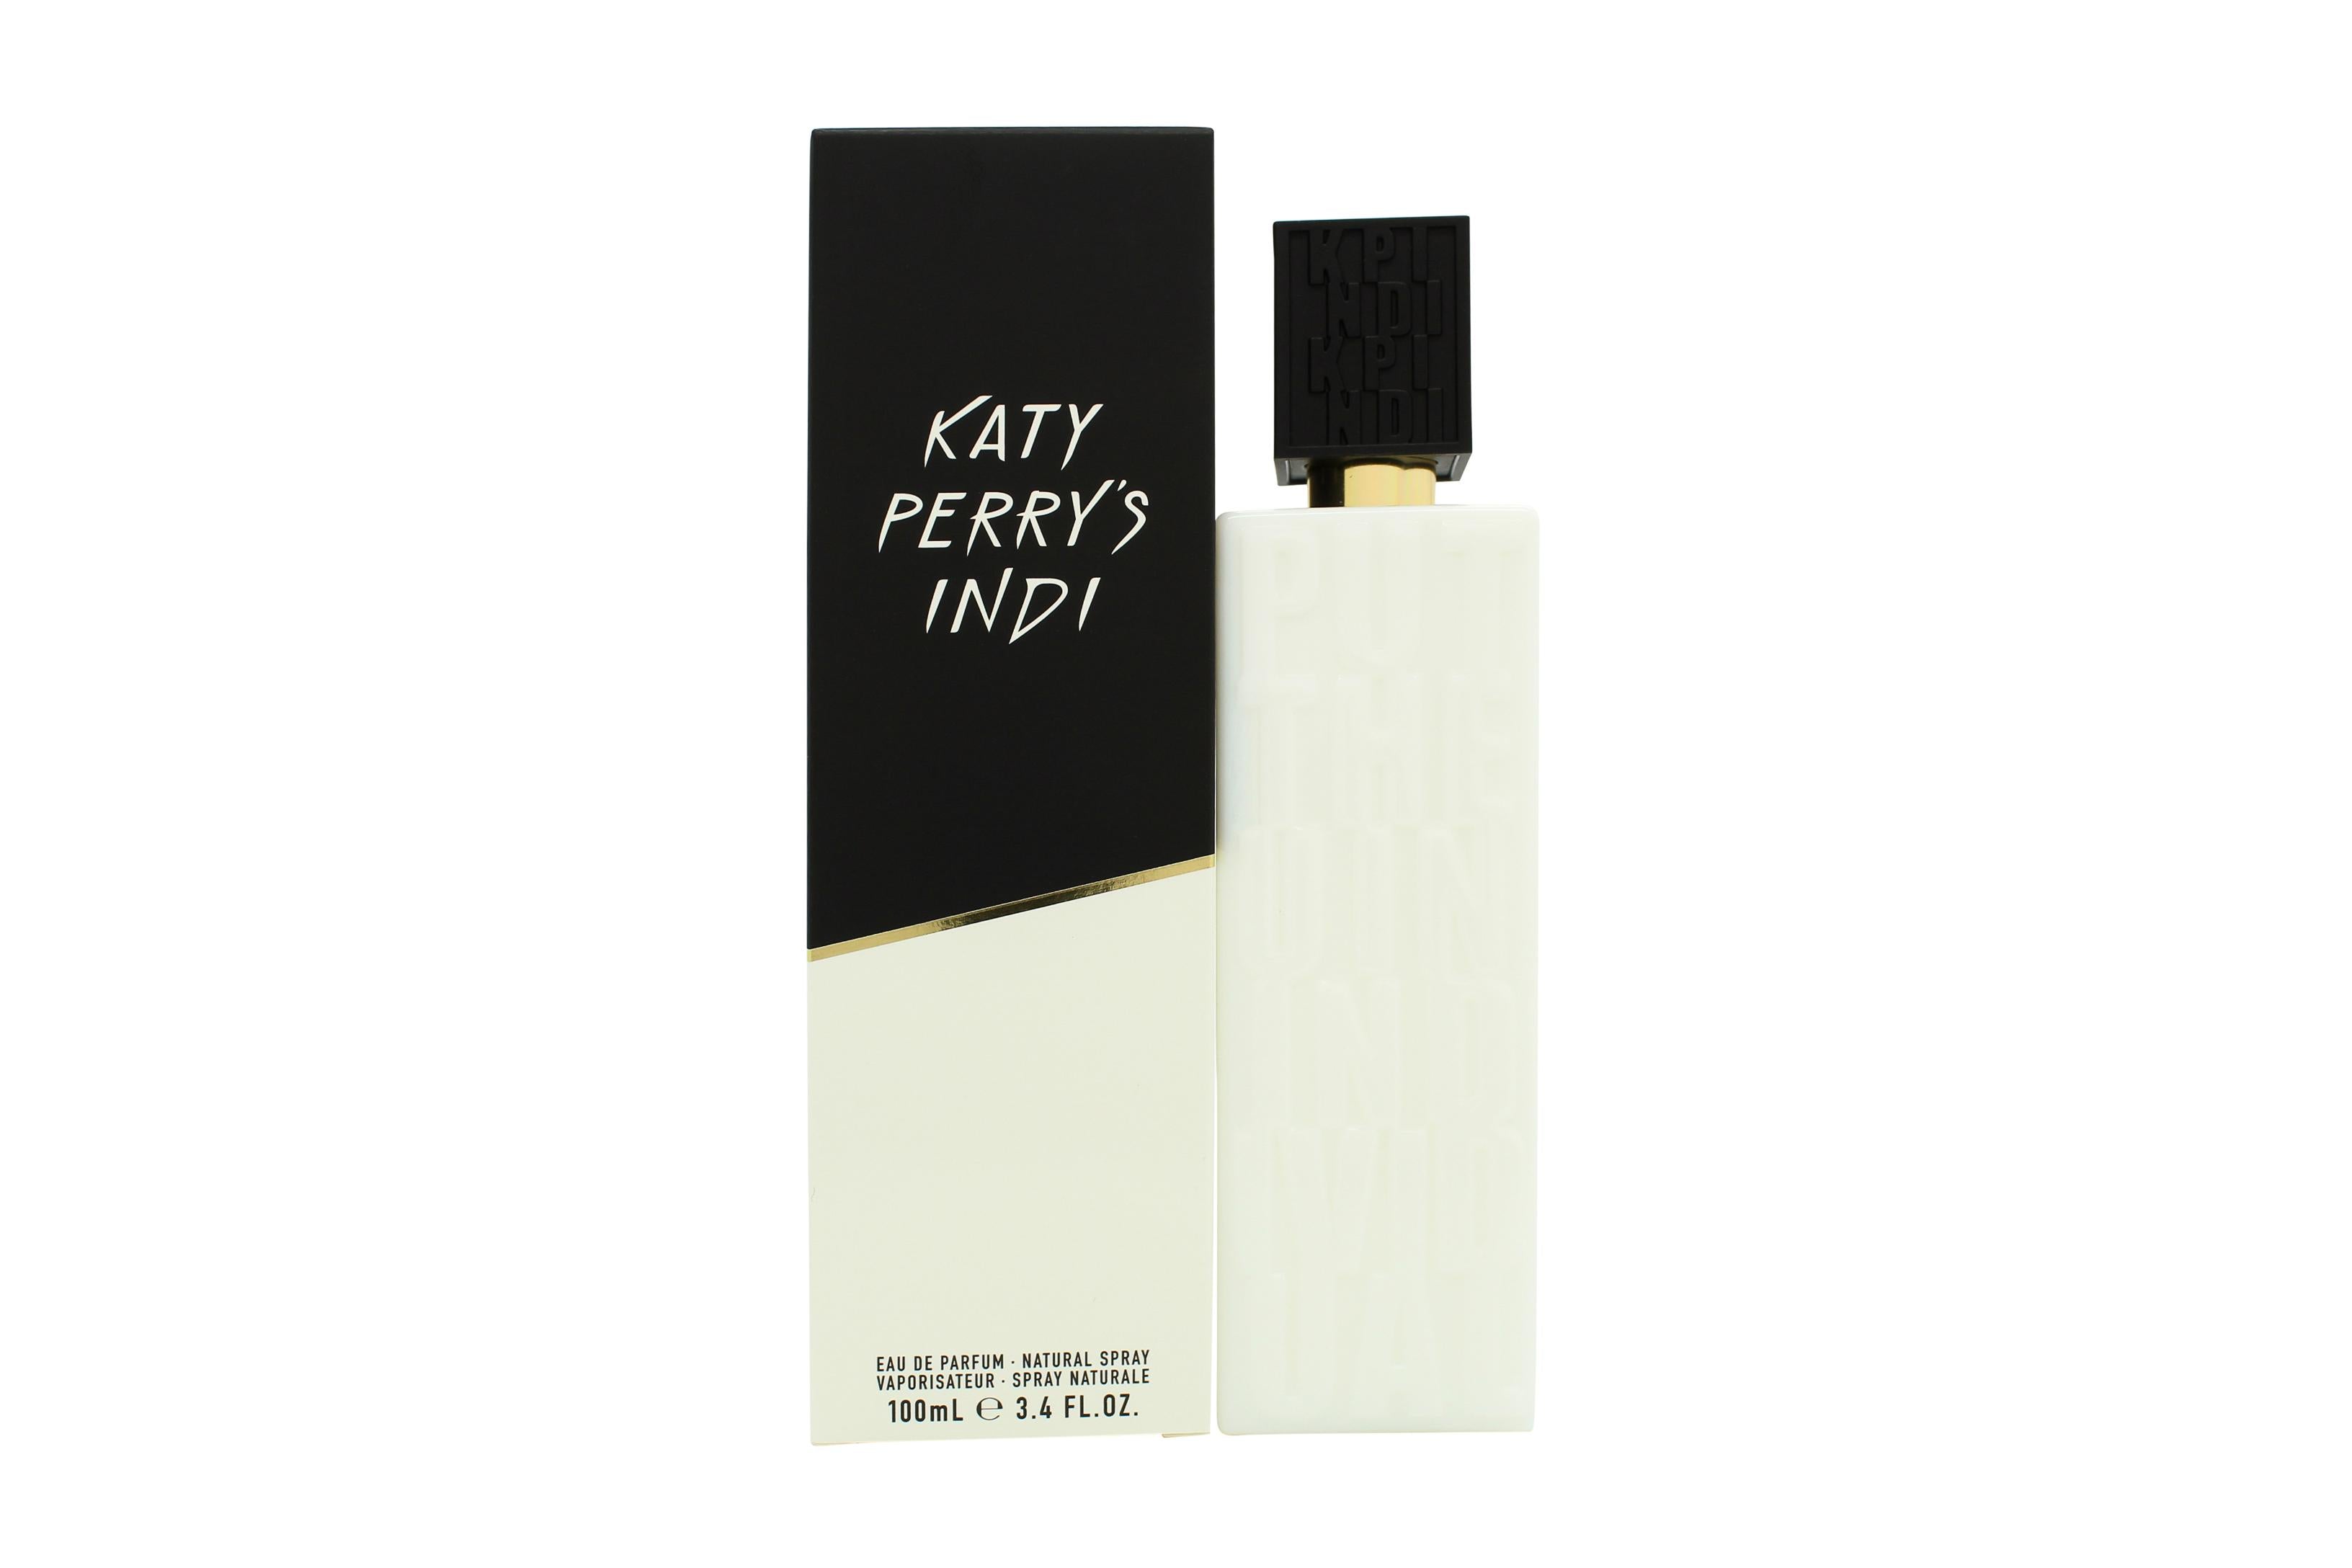 View Katy Perry Katy Perrys Indi Eau de Parfum 100ml Spray information